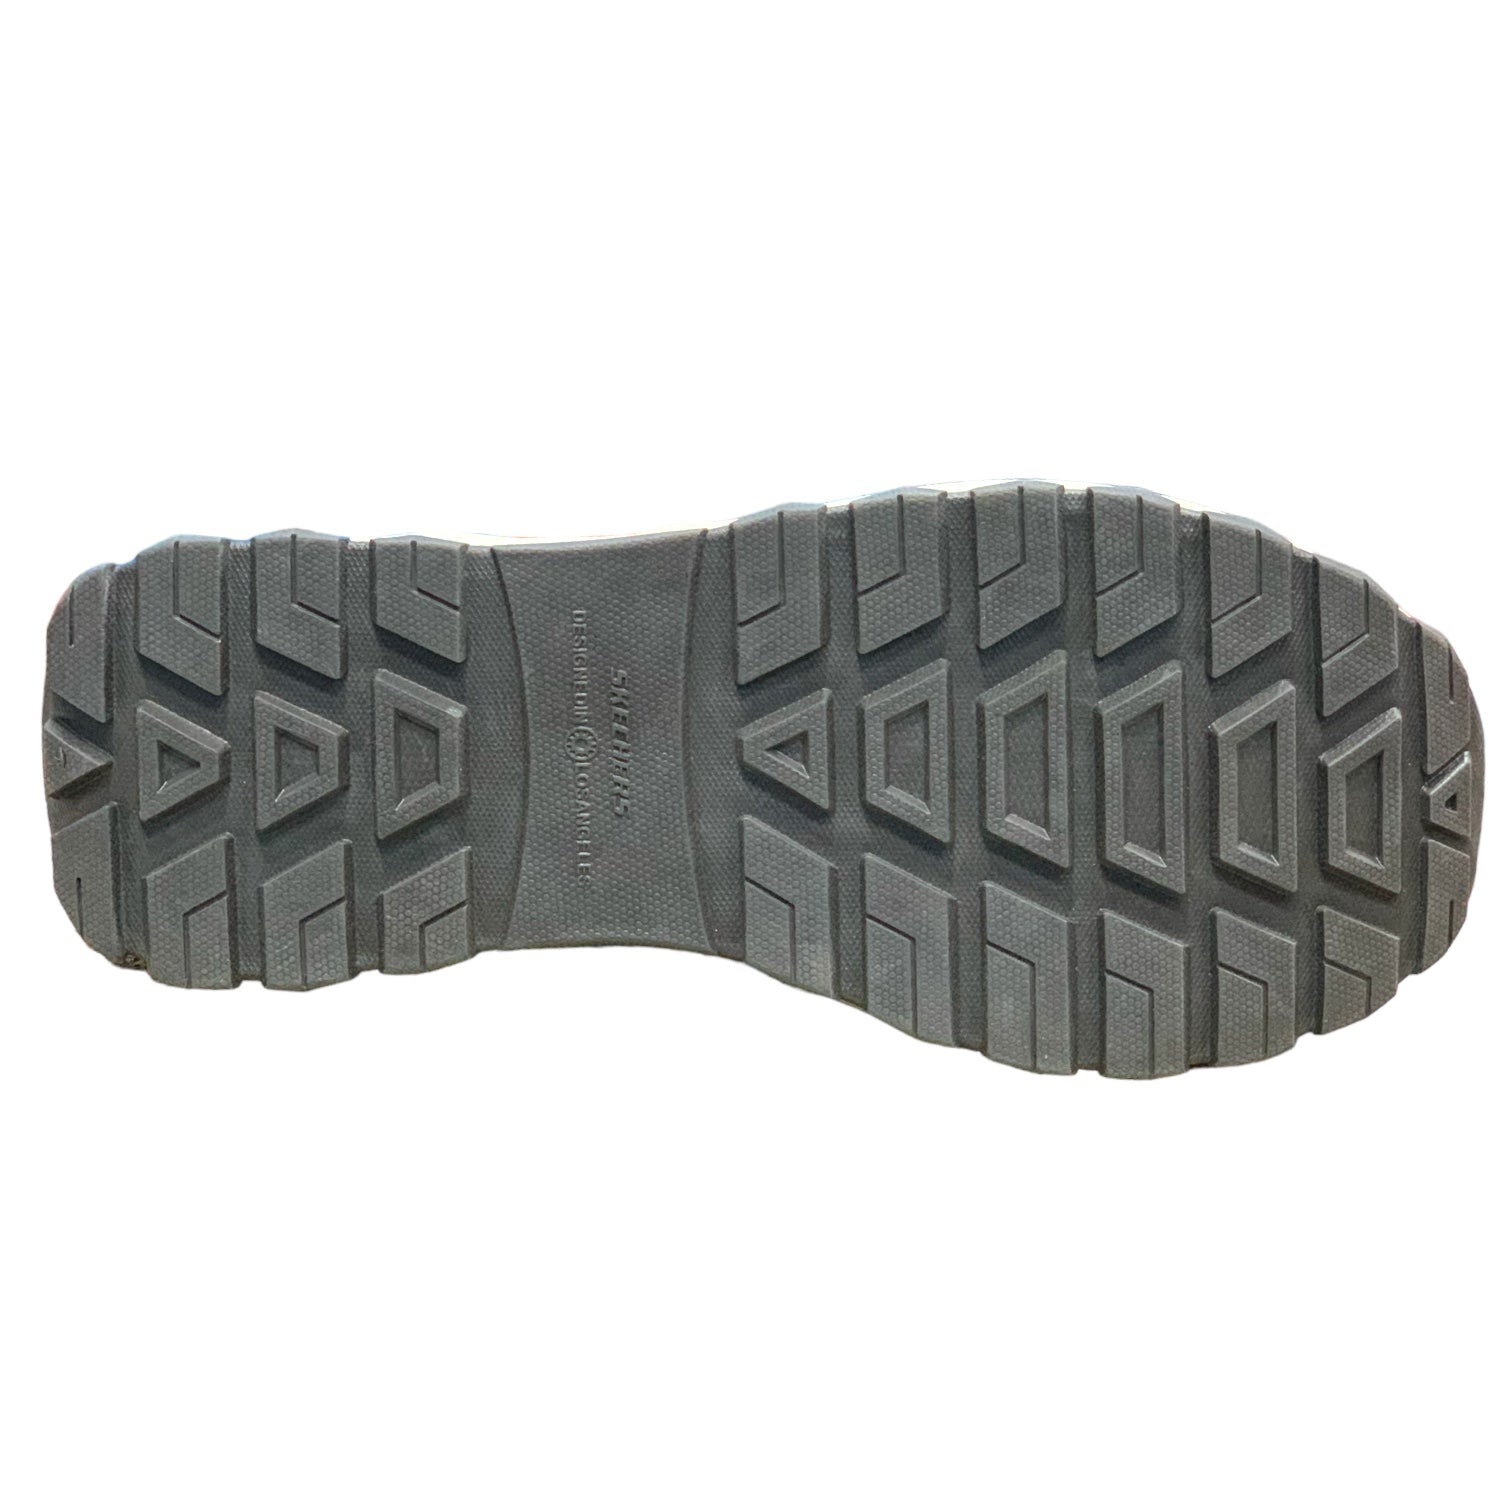 Skechers Good Year Tyre Sole Premium Khaki(Dot Perfect)